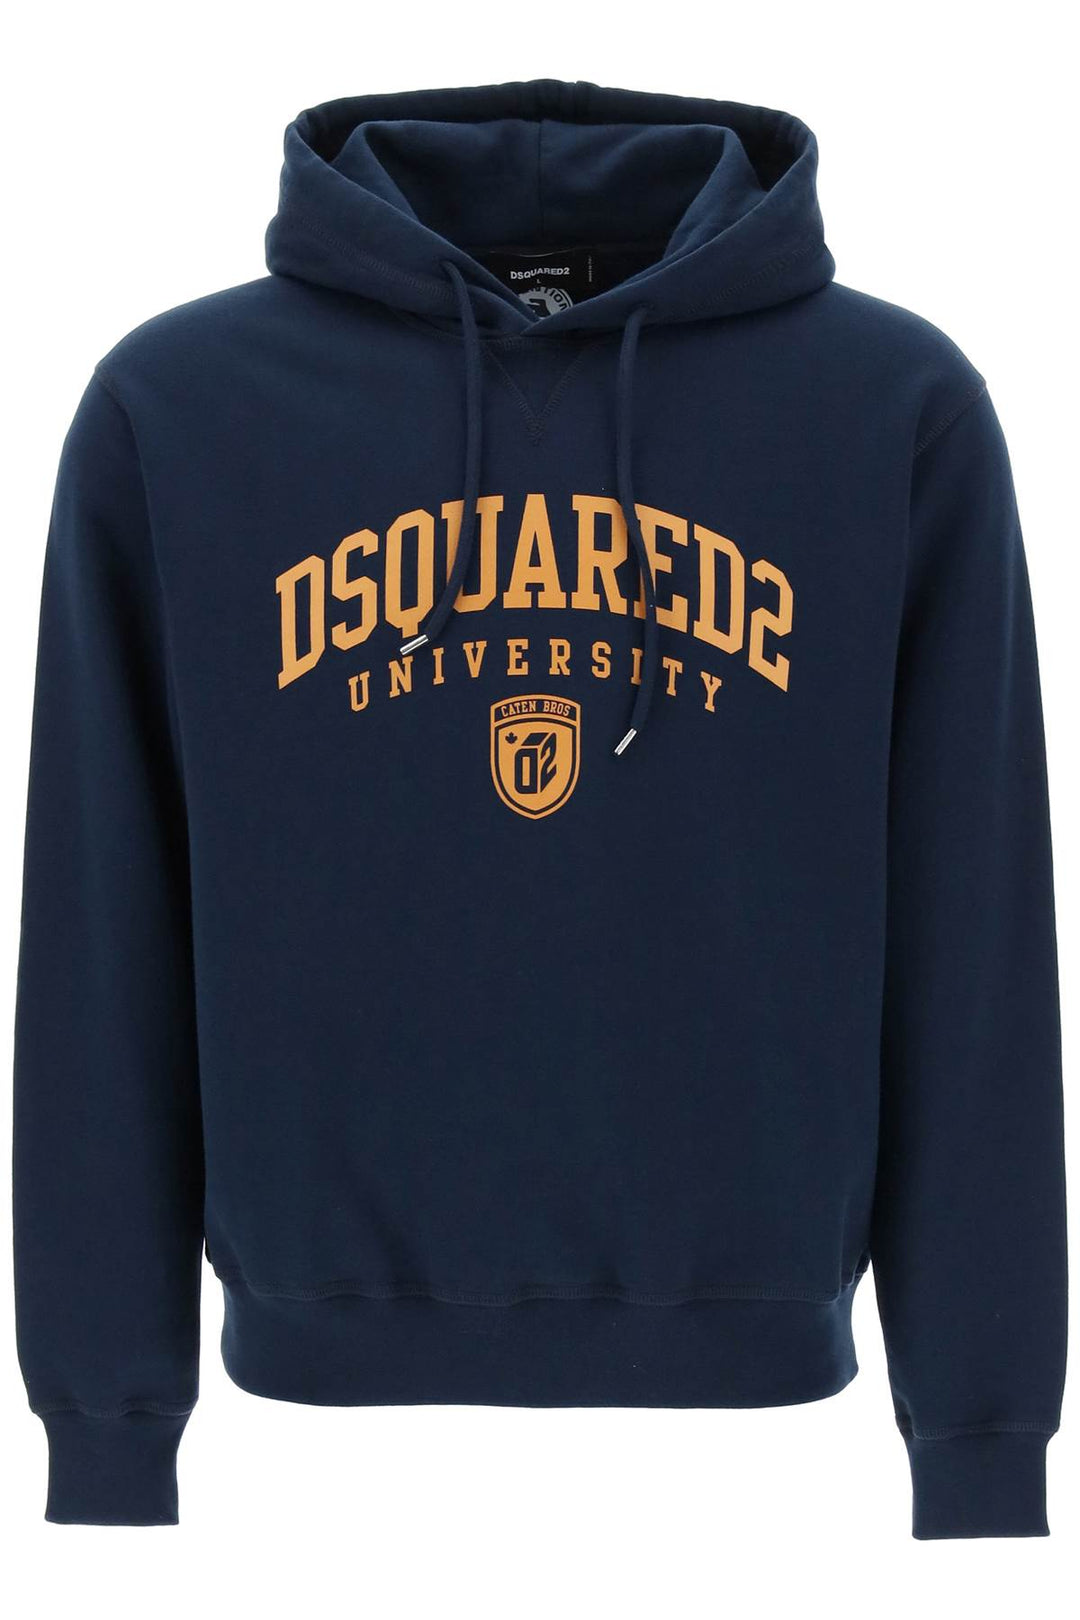 Dsquared2 'University' Cool Fit Hoodie   Blu